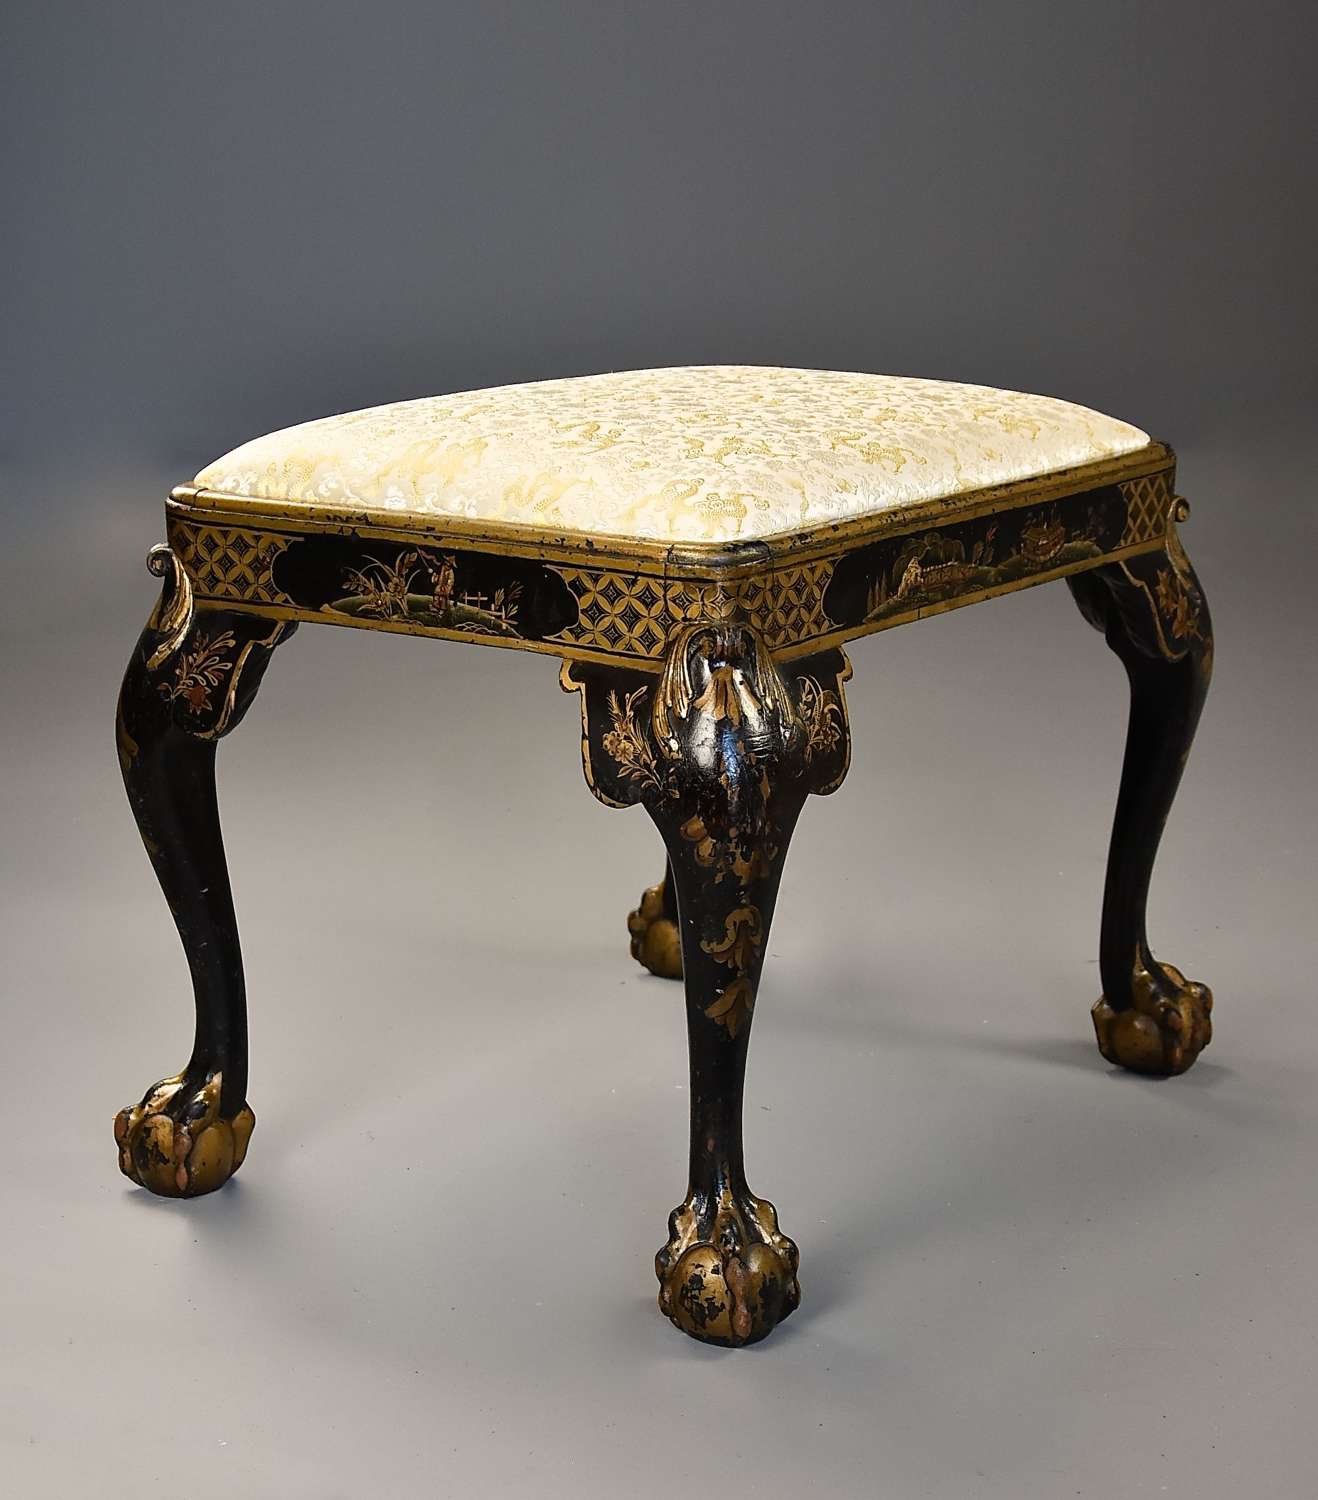 Late 19th century Georgian style Japanned stool